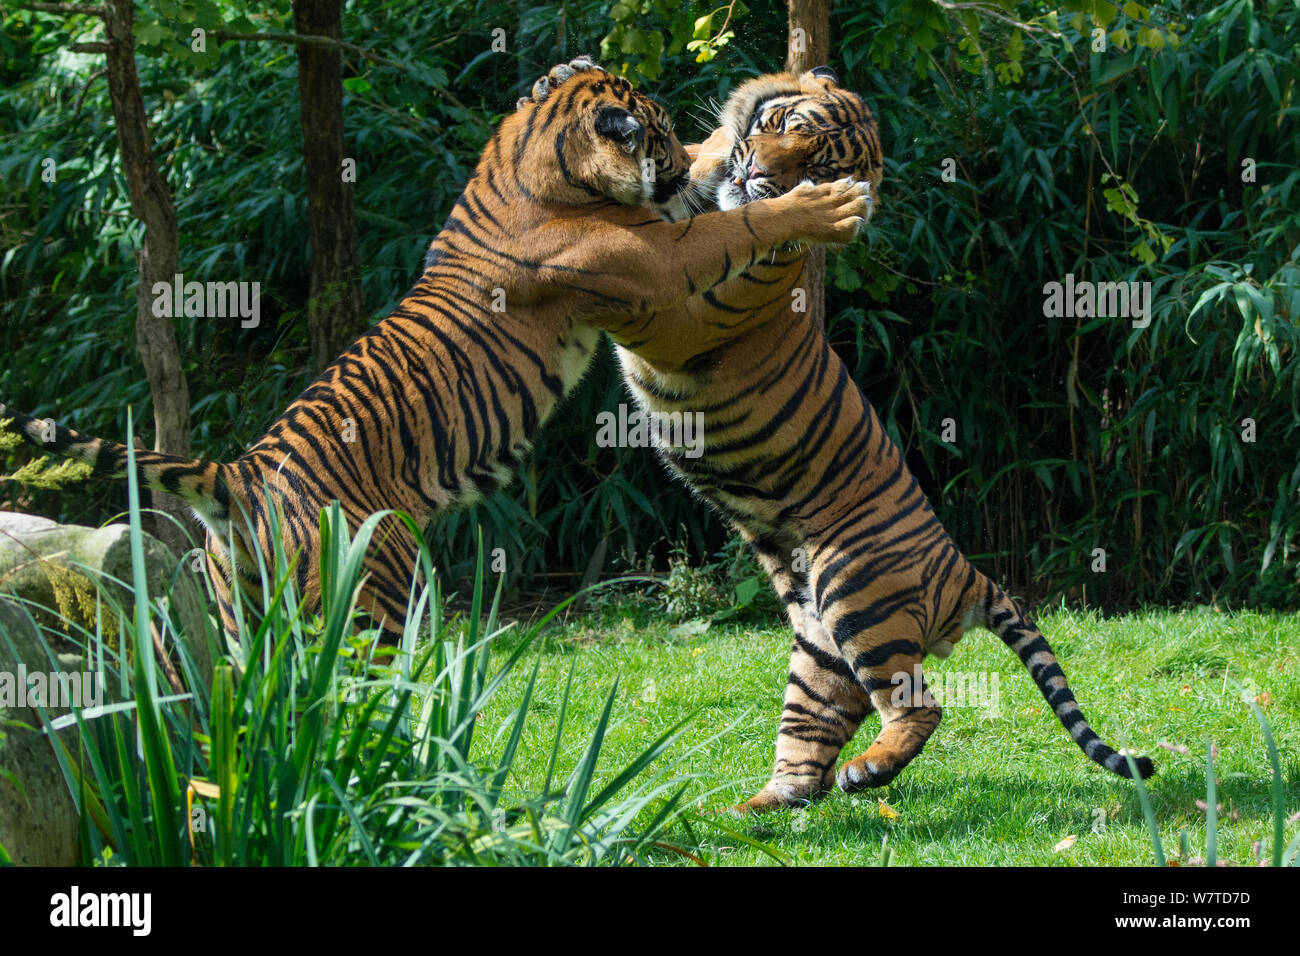 Le tigri di Sumatra (Panthera tigris sumatrae) combattimenti, captive, nativo di Sumatra, Indonesia. Foto Stock